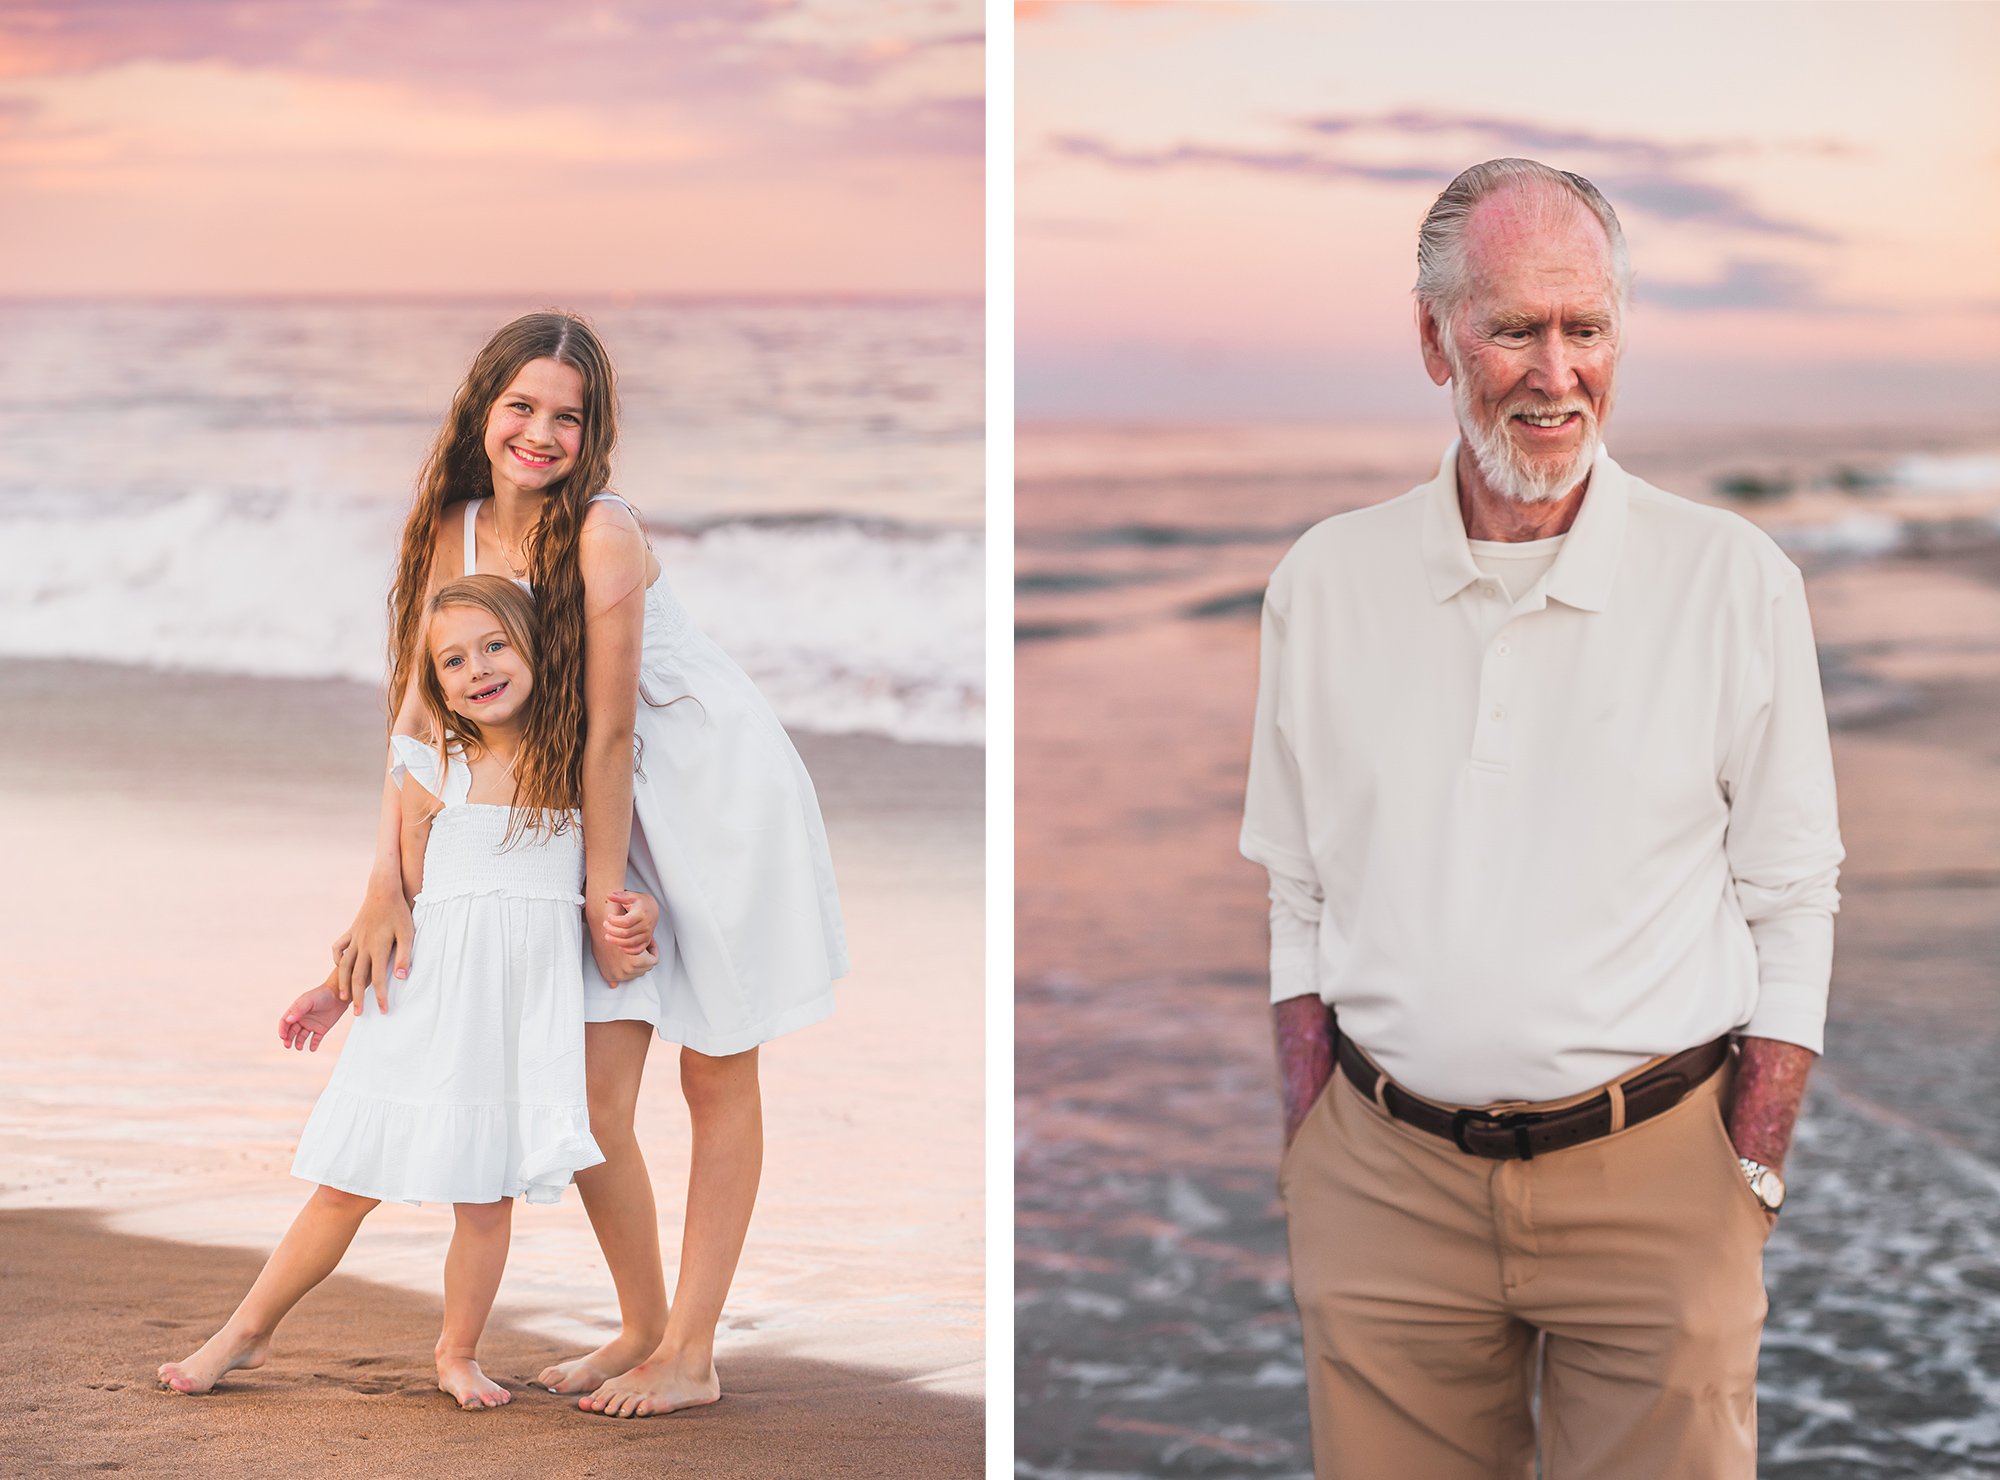 Boston Family Portrait Photographer | Stephen Grant Photography